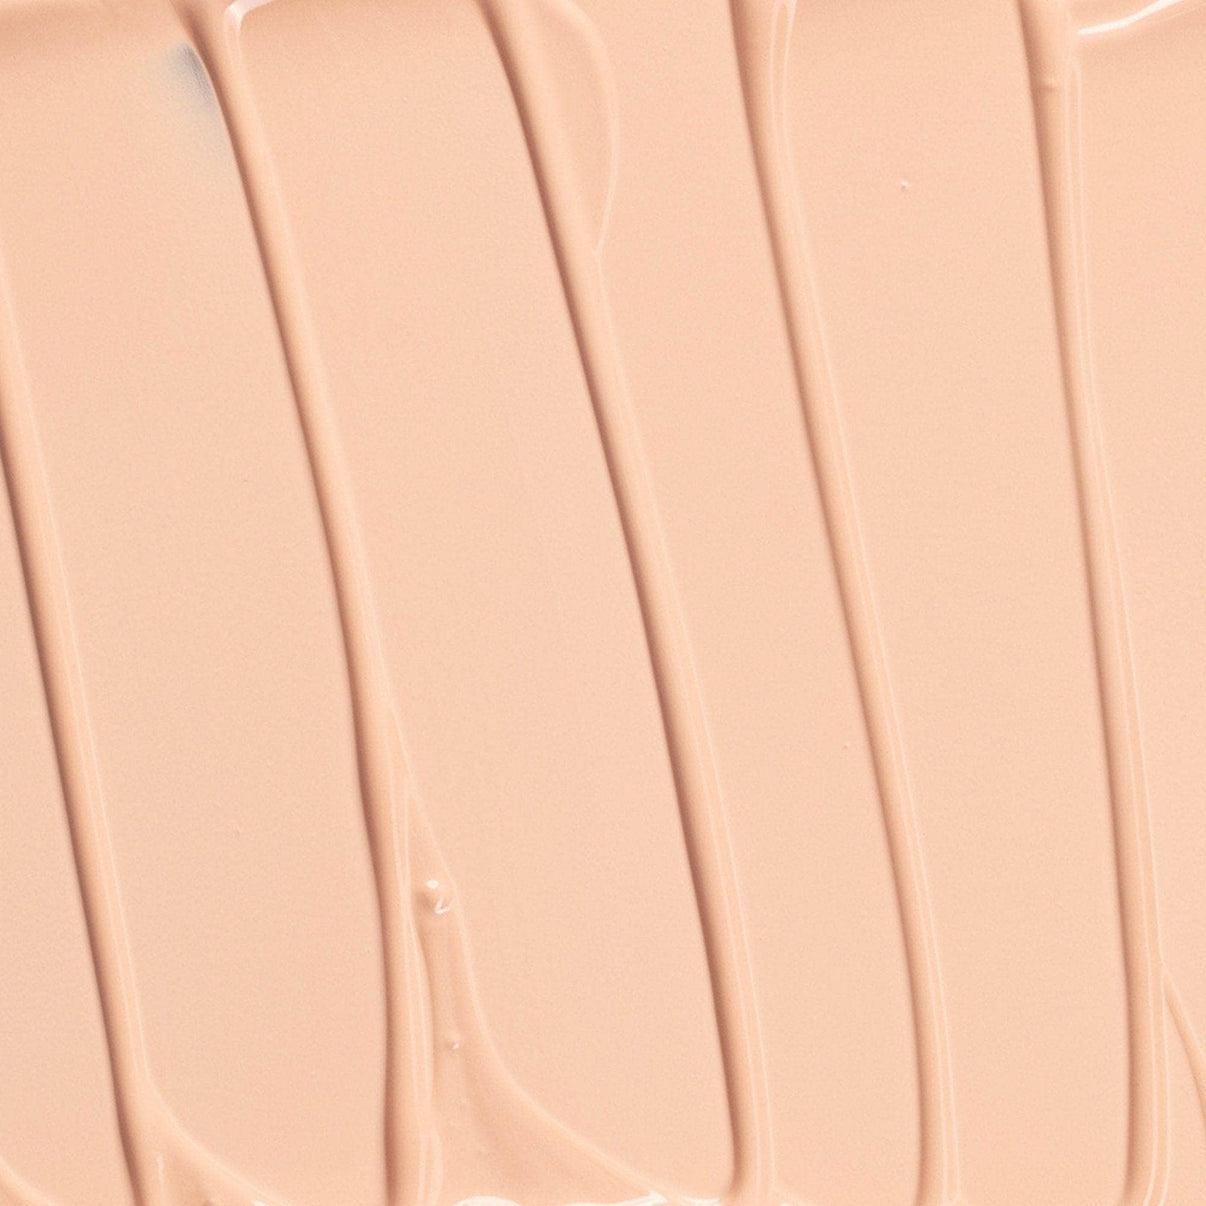 Nudefix cream concealer in shade nude 2 texture swatch